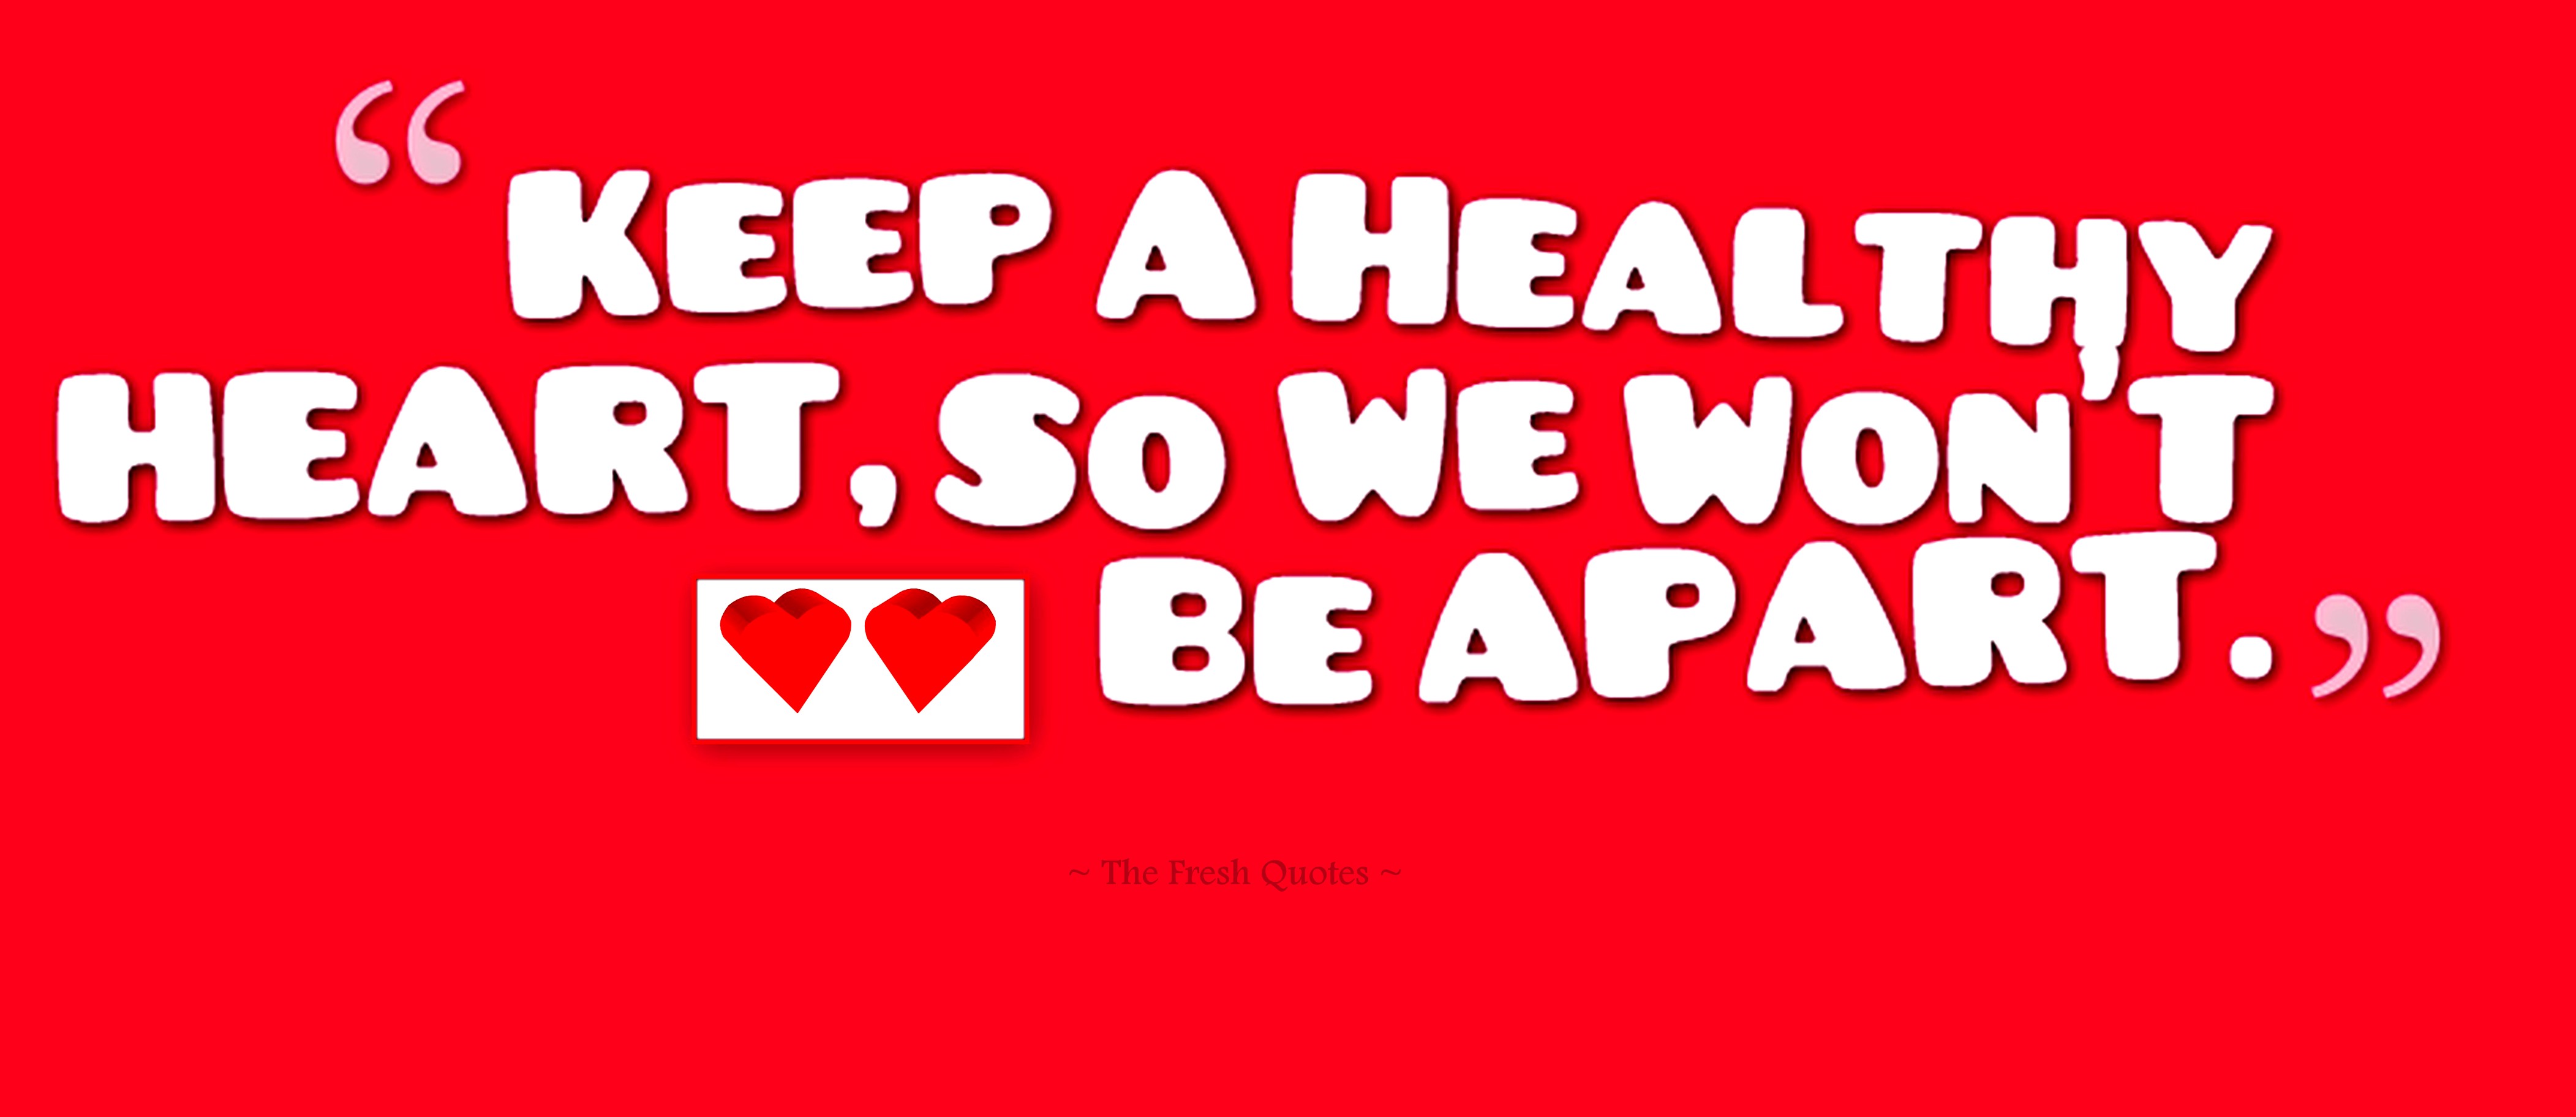 Keep a healthy heart, so we won't be apart